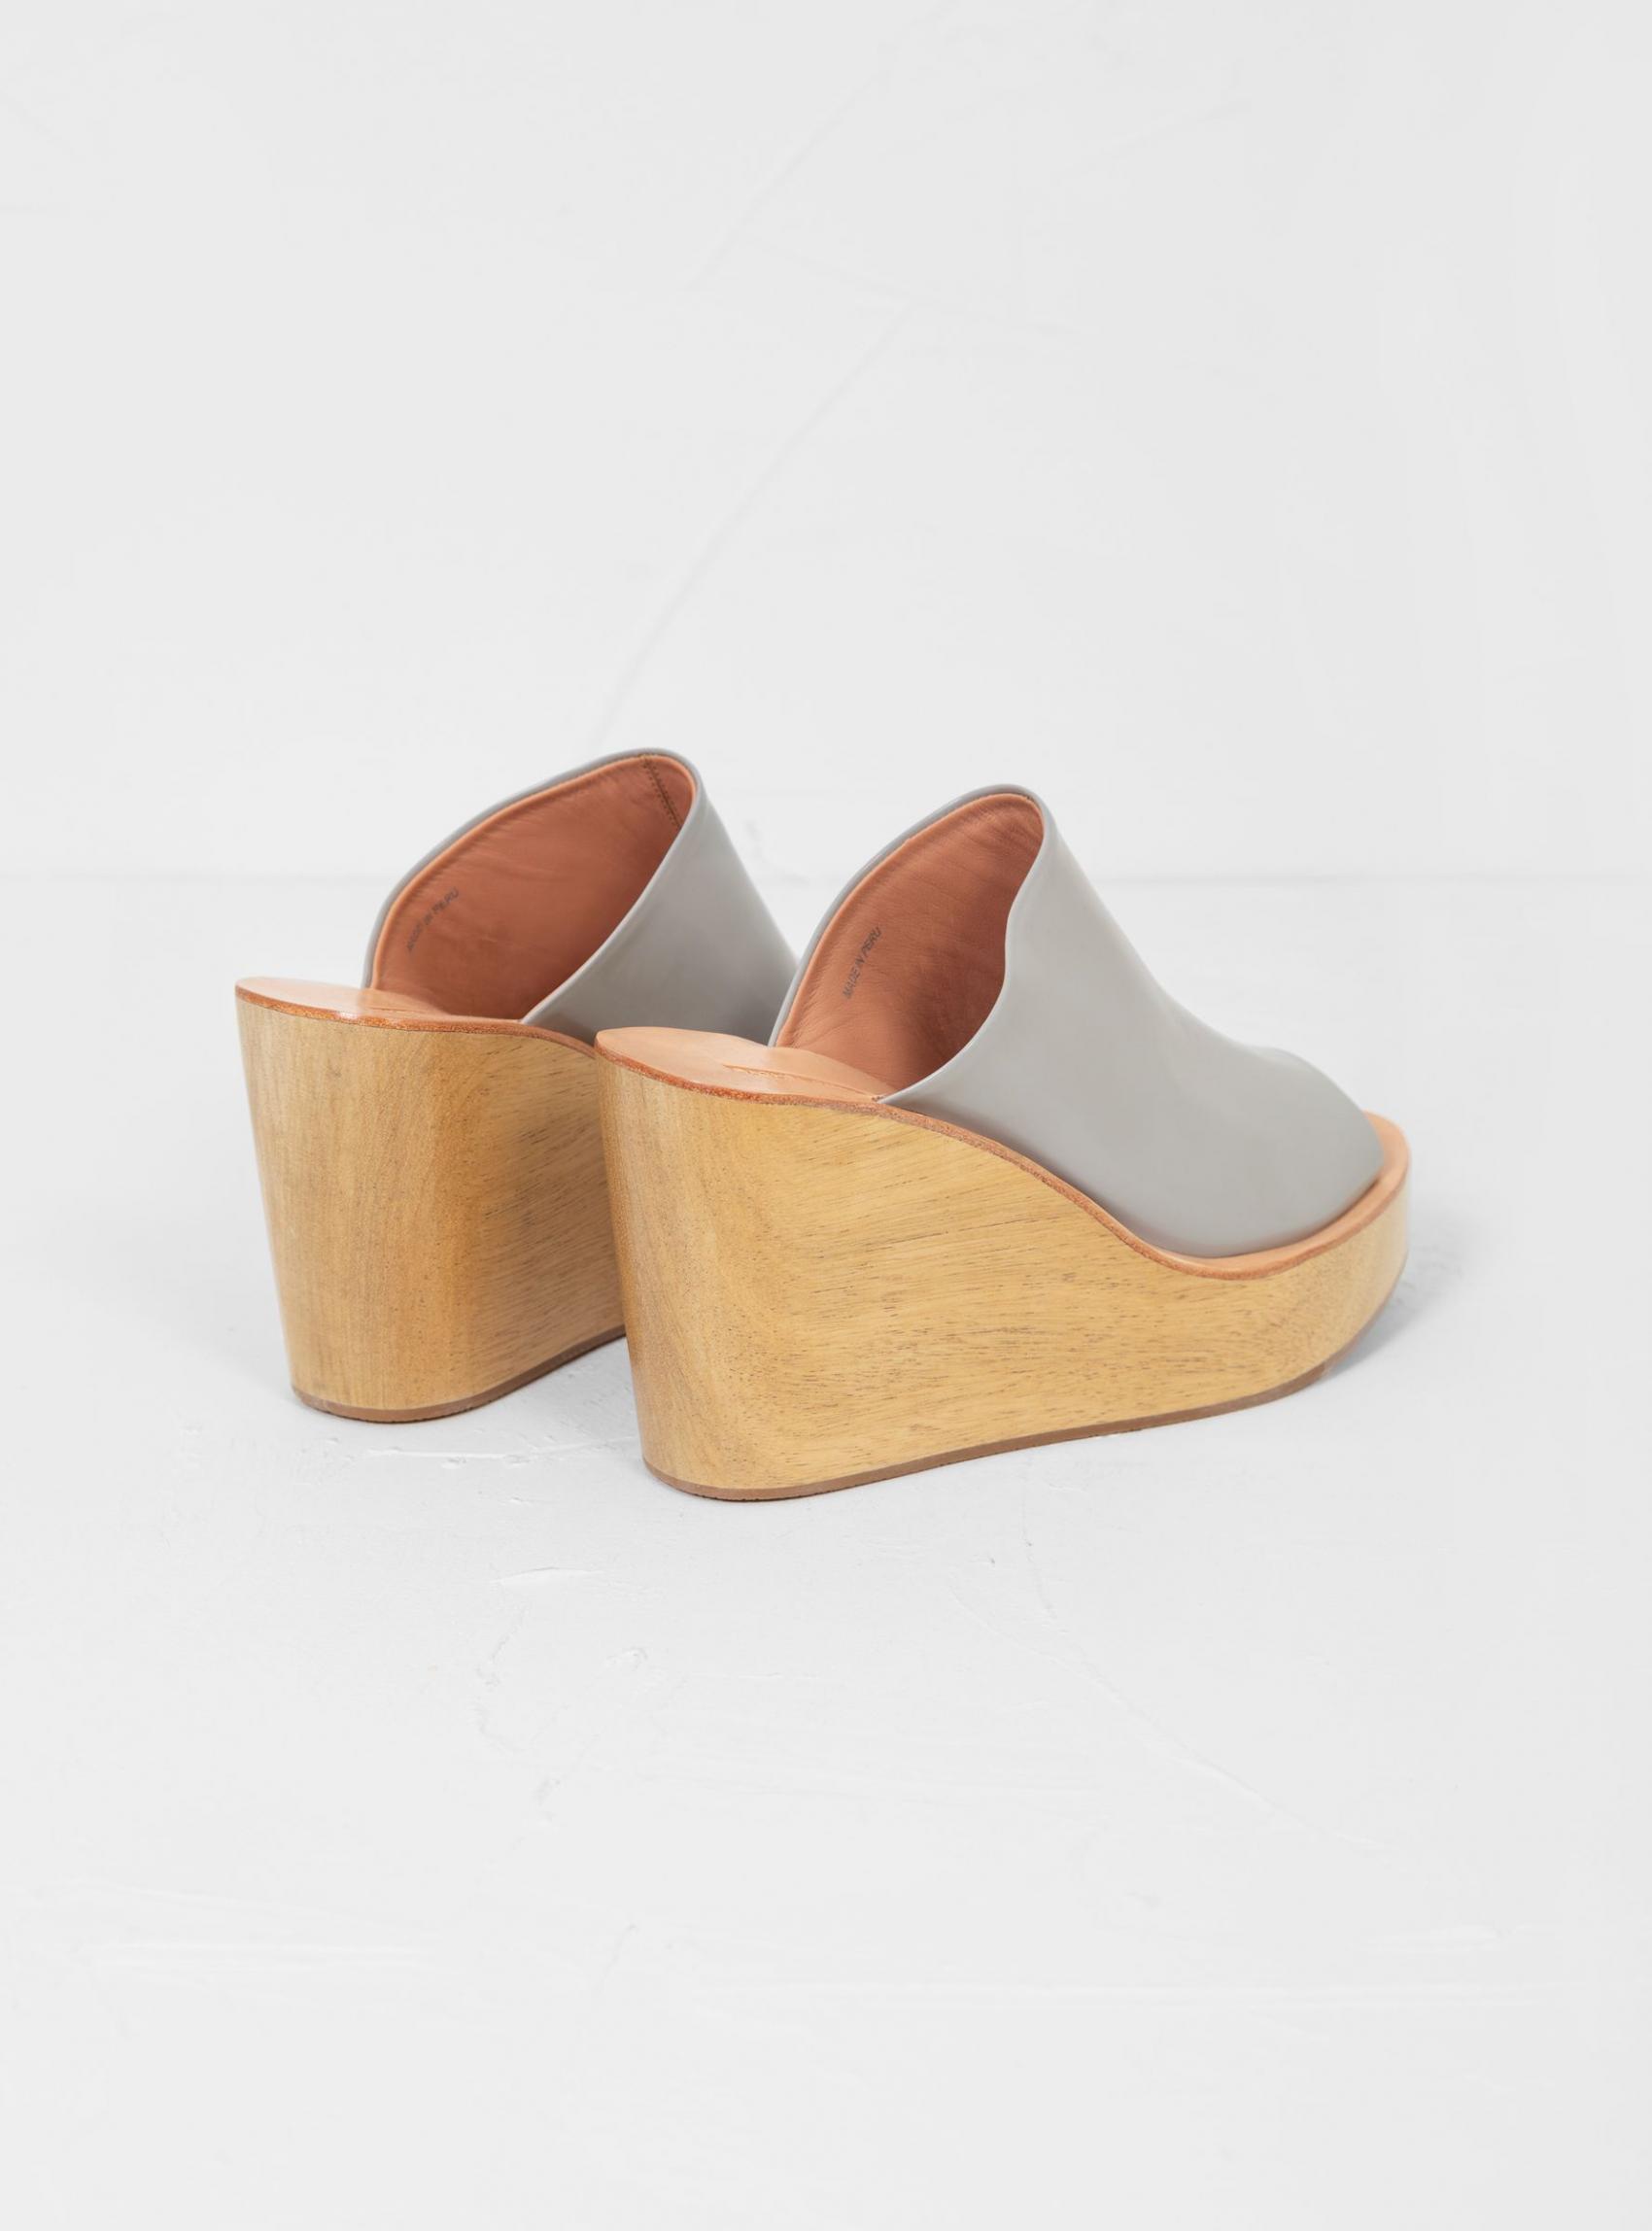 Footwear | Rachel Comey Womens Moon Wedges Grey Grey